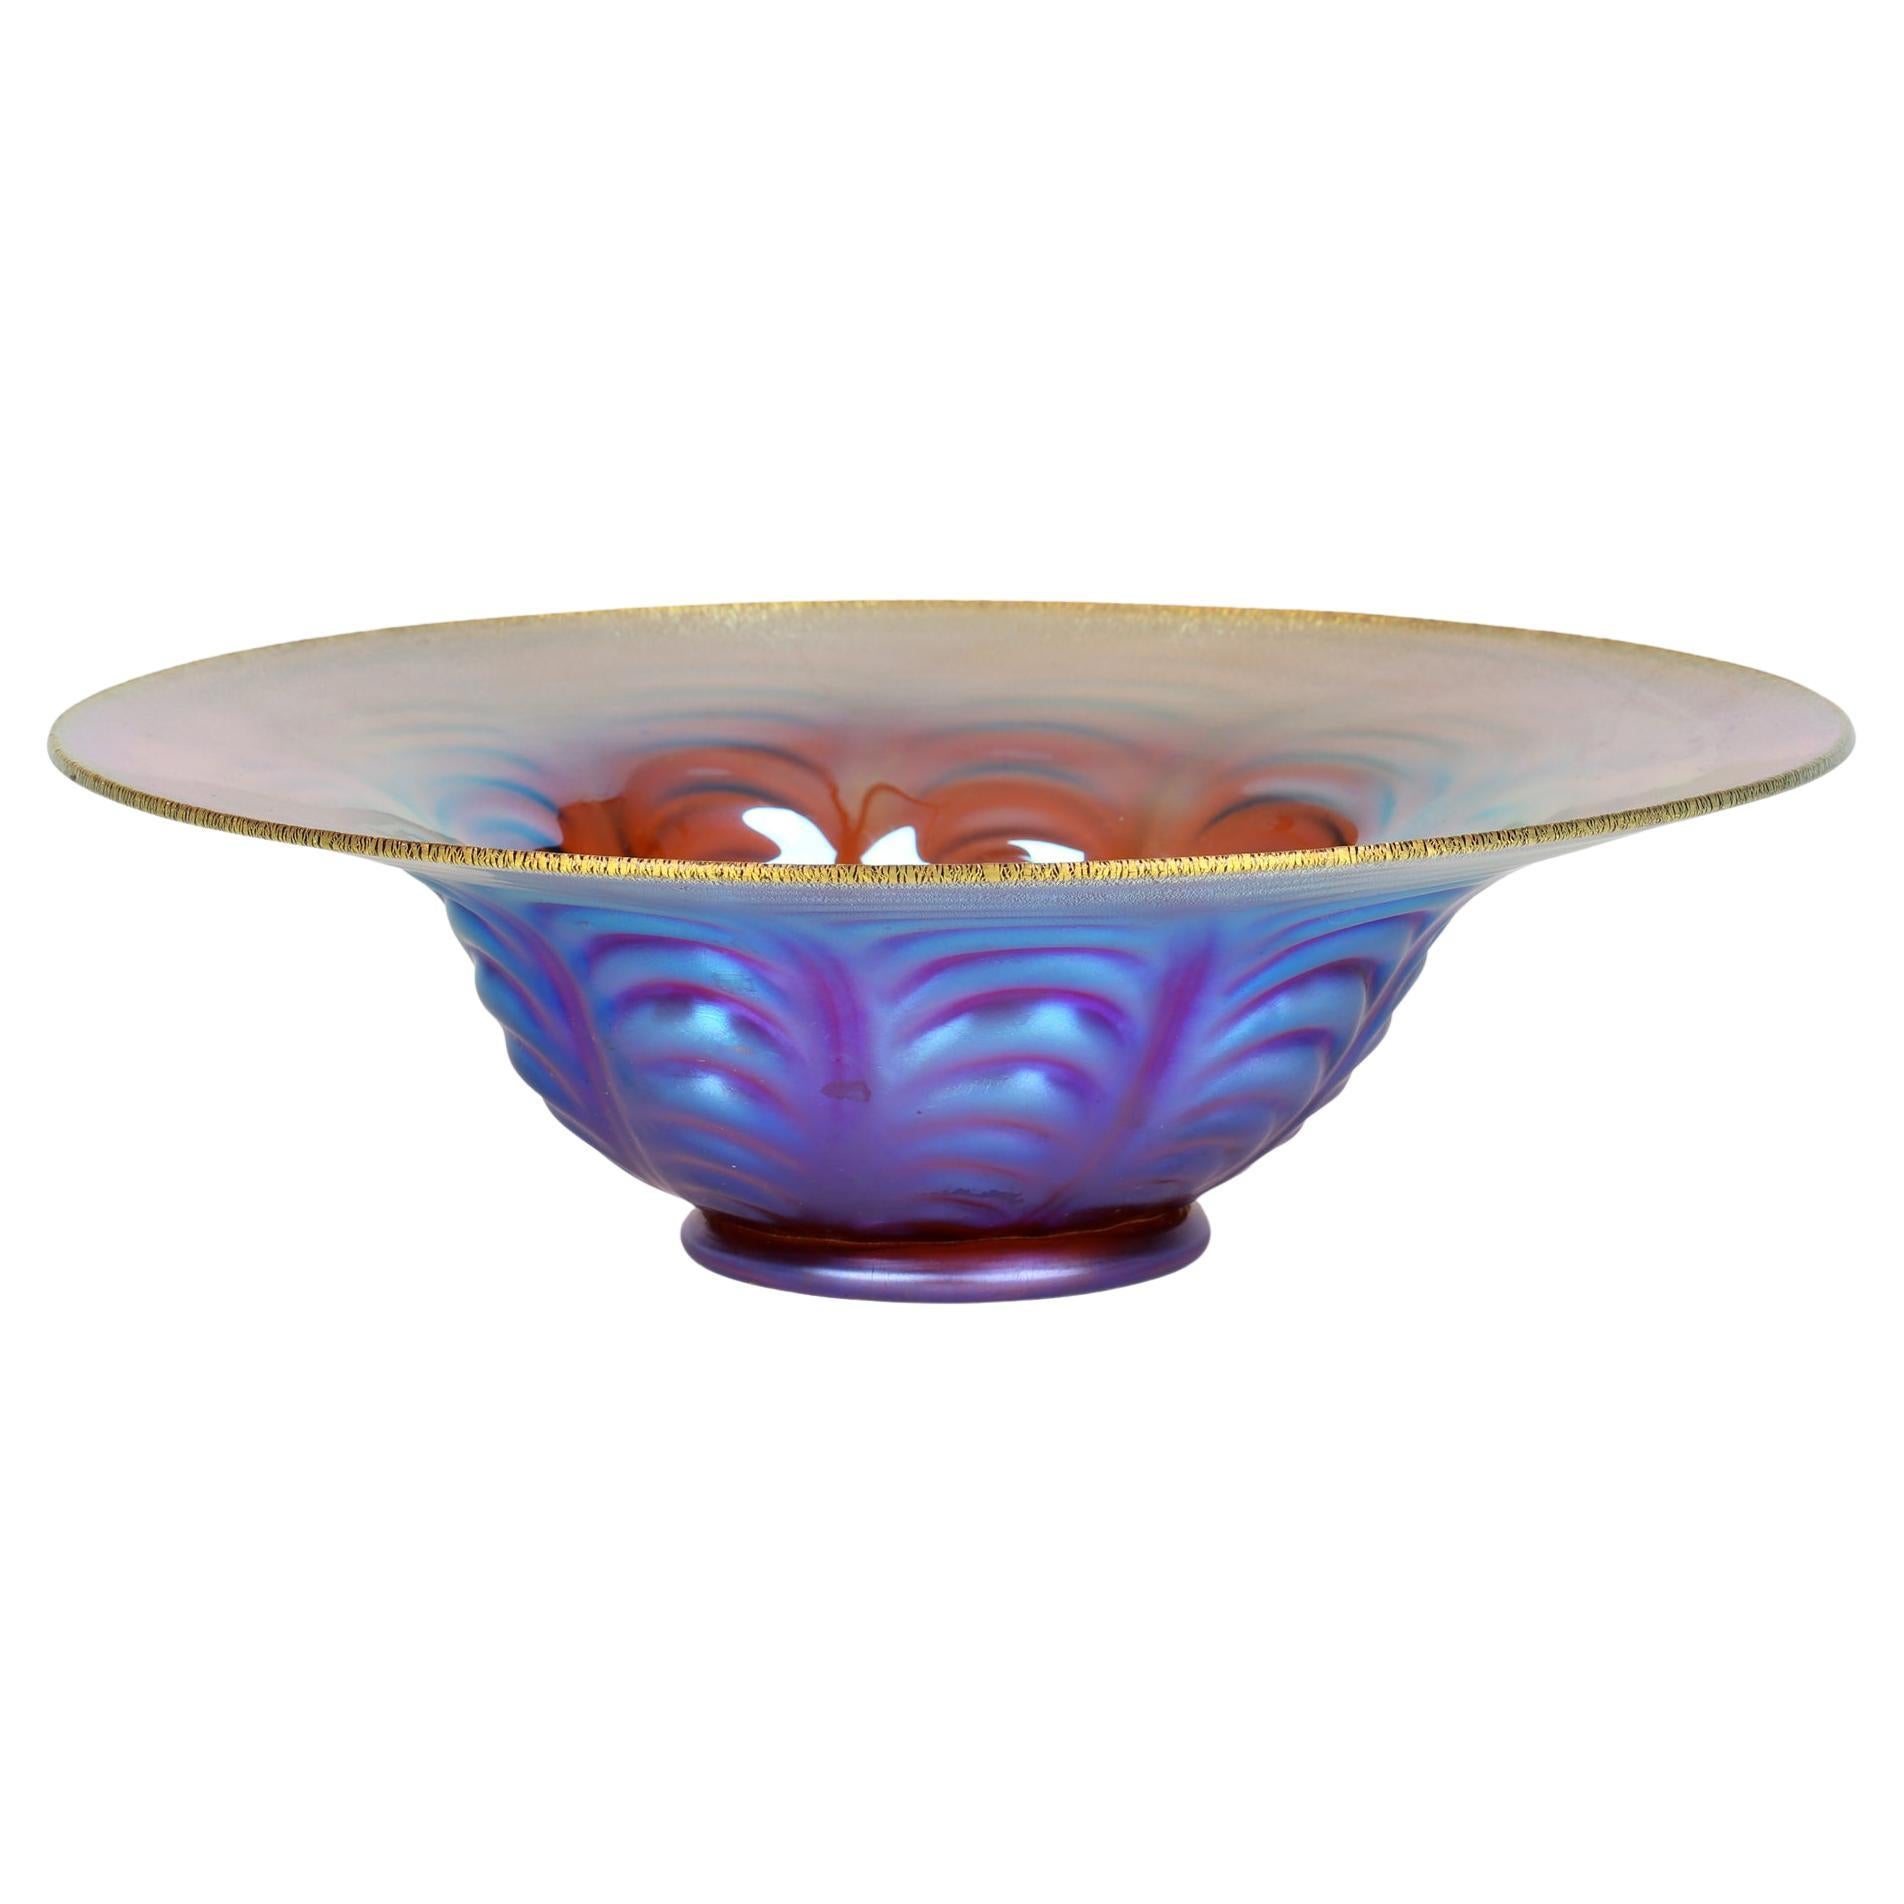 WMF Karl Wiedmann Art Deco Myra Kristal Iridescent Amber Art Glass Bowl